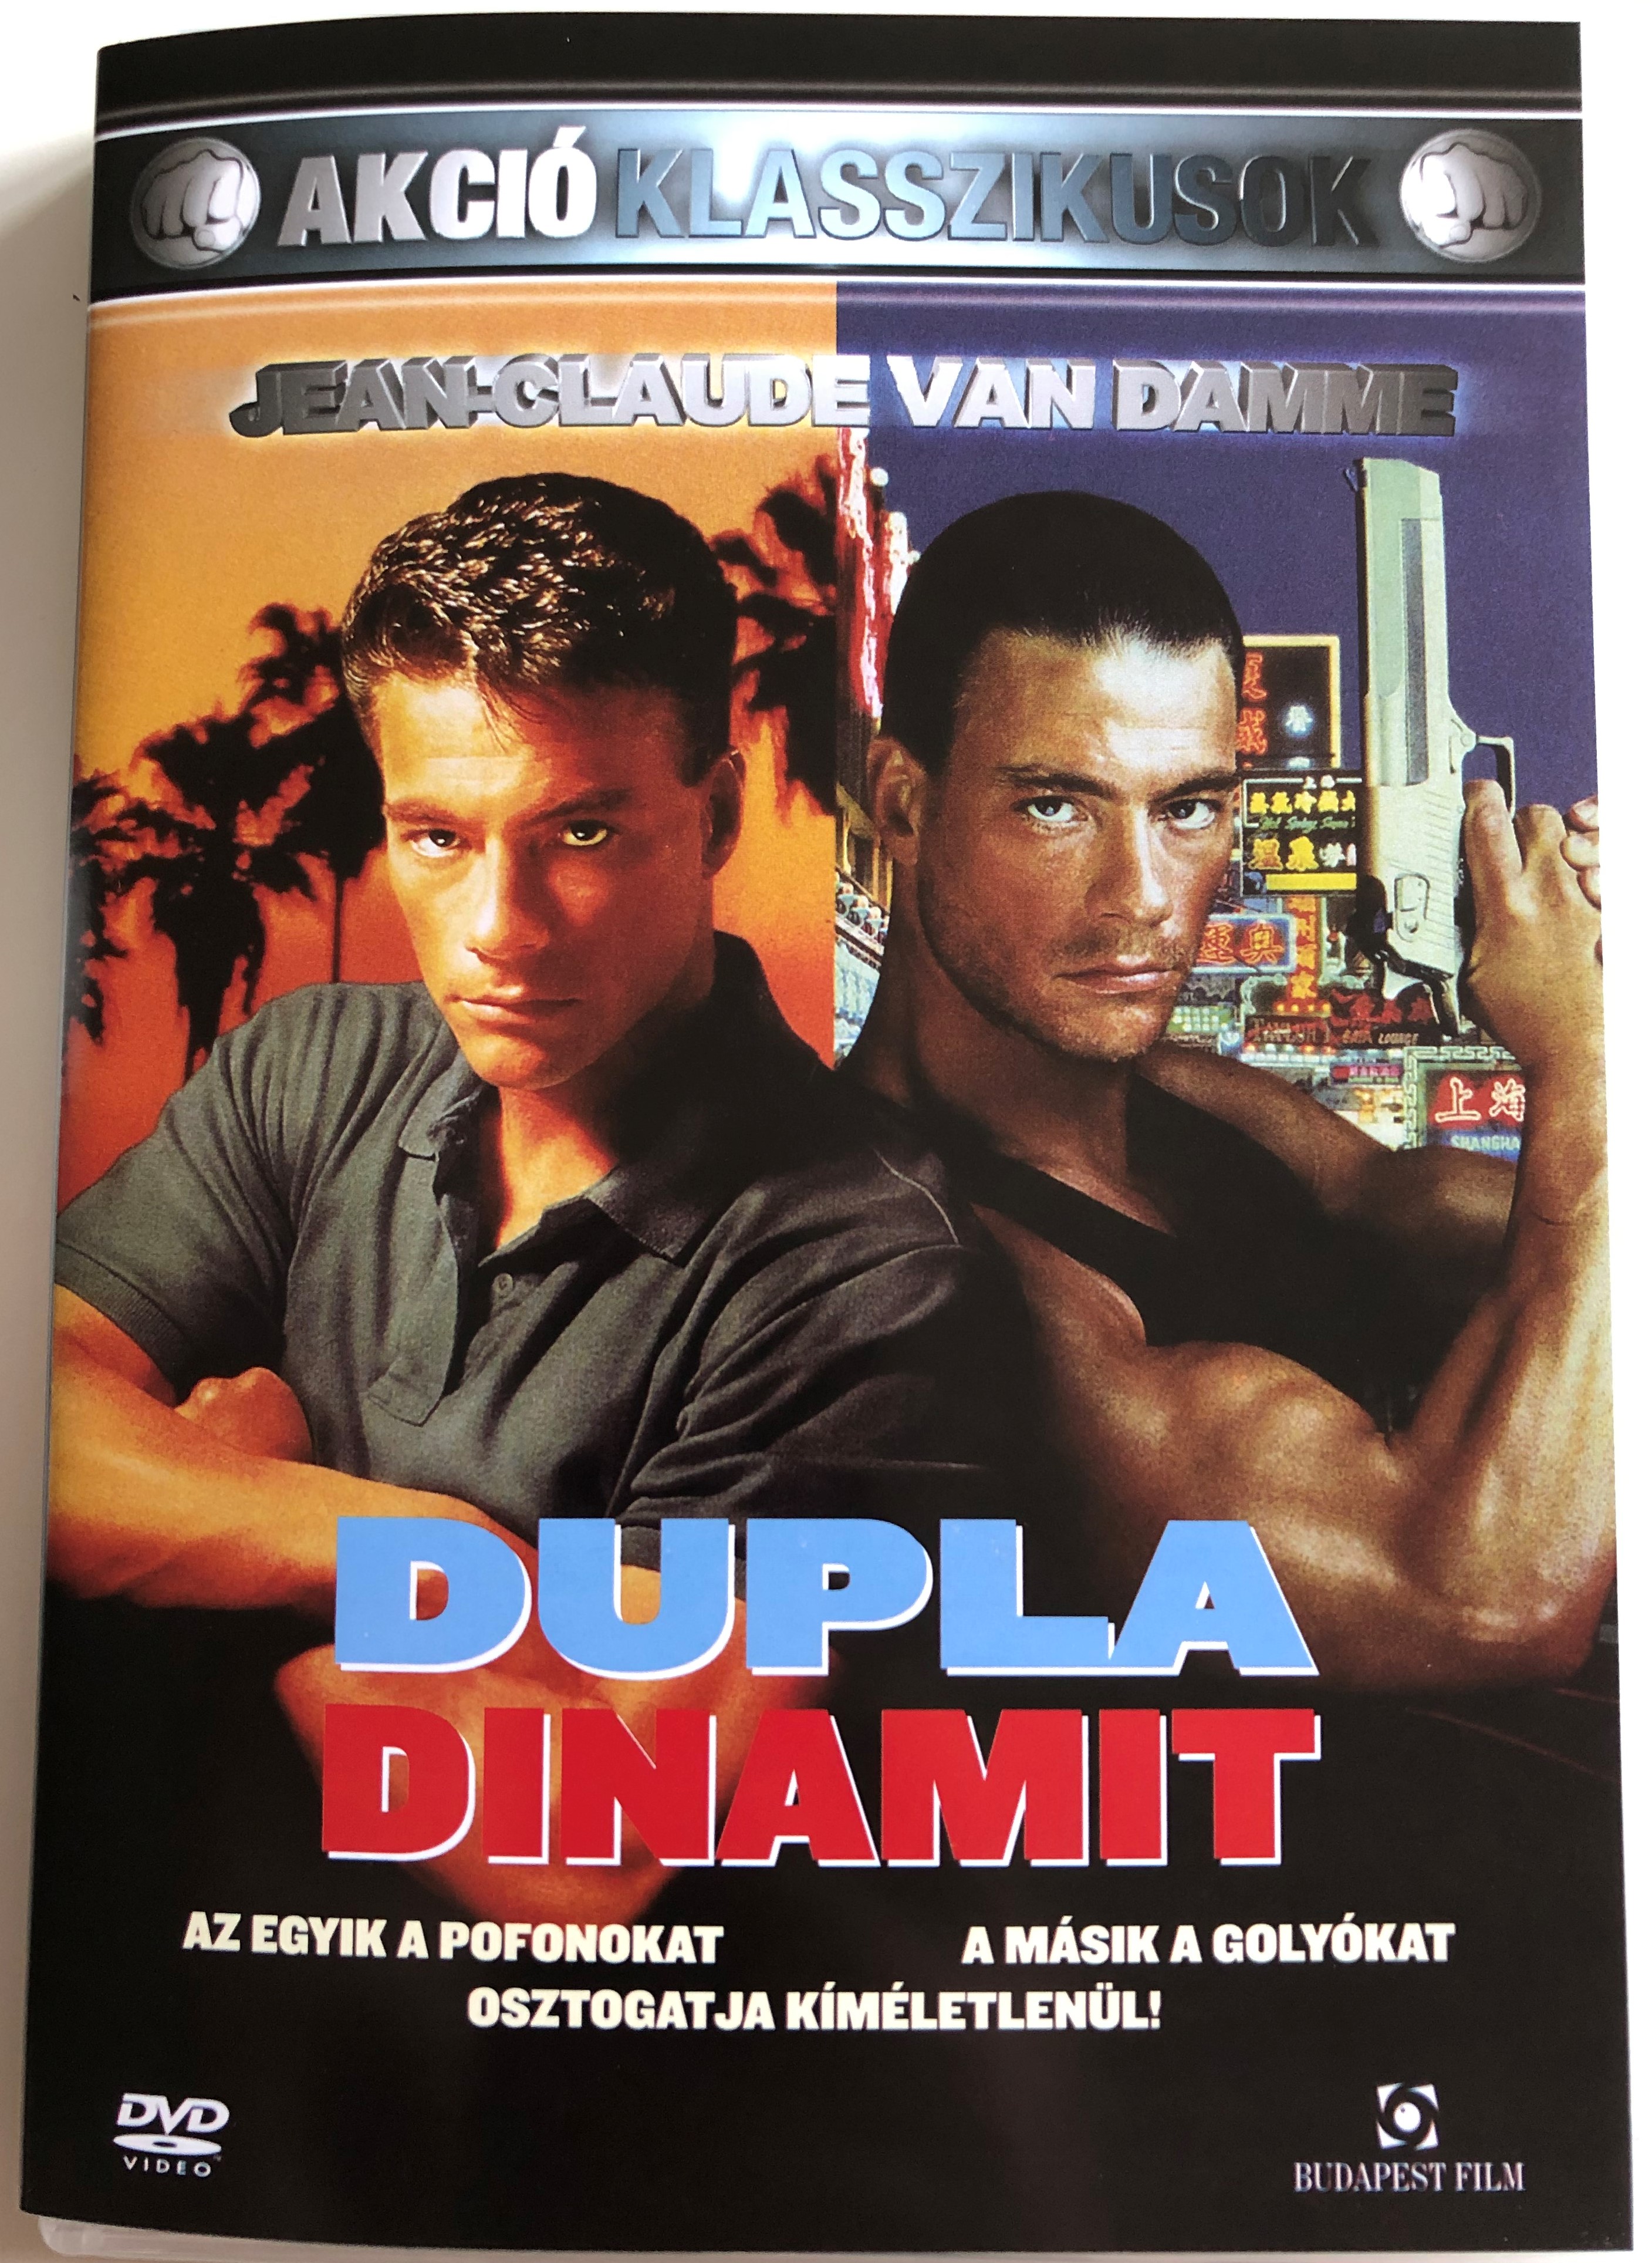 Double Impact DVD 1991 Dupla dinamit / Directed by Sheldon Lettich /  Starring: Jean-Claude van Damme, Geoffrey Lewis, Alan Scarfe - Bible in My  Language